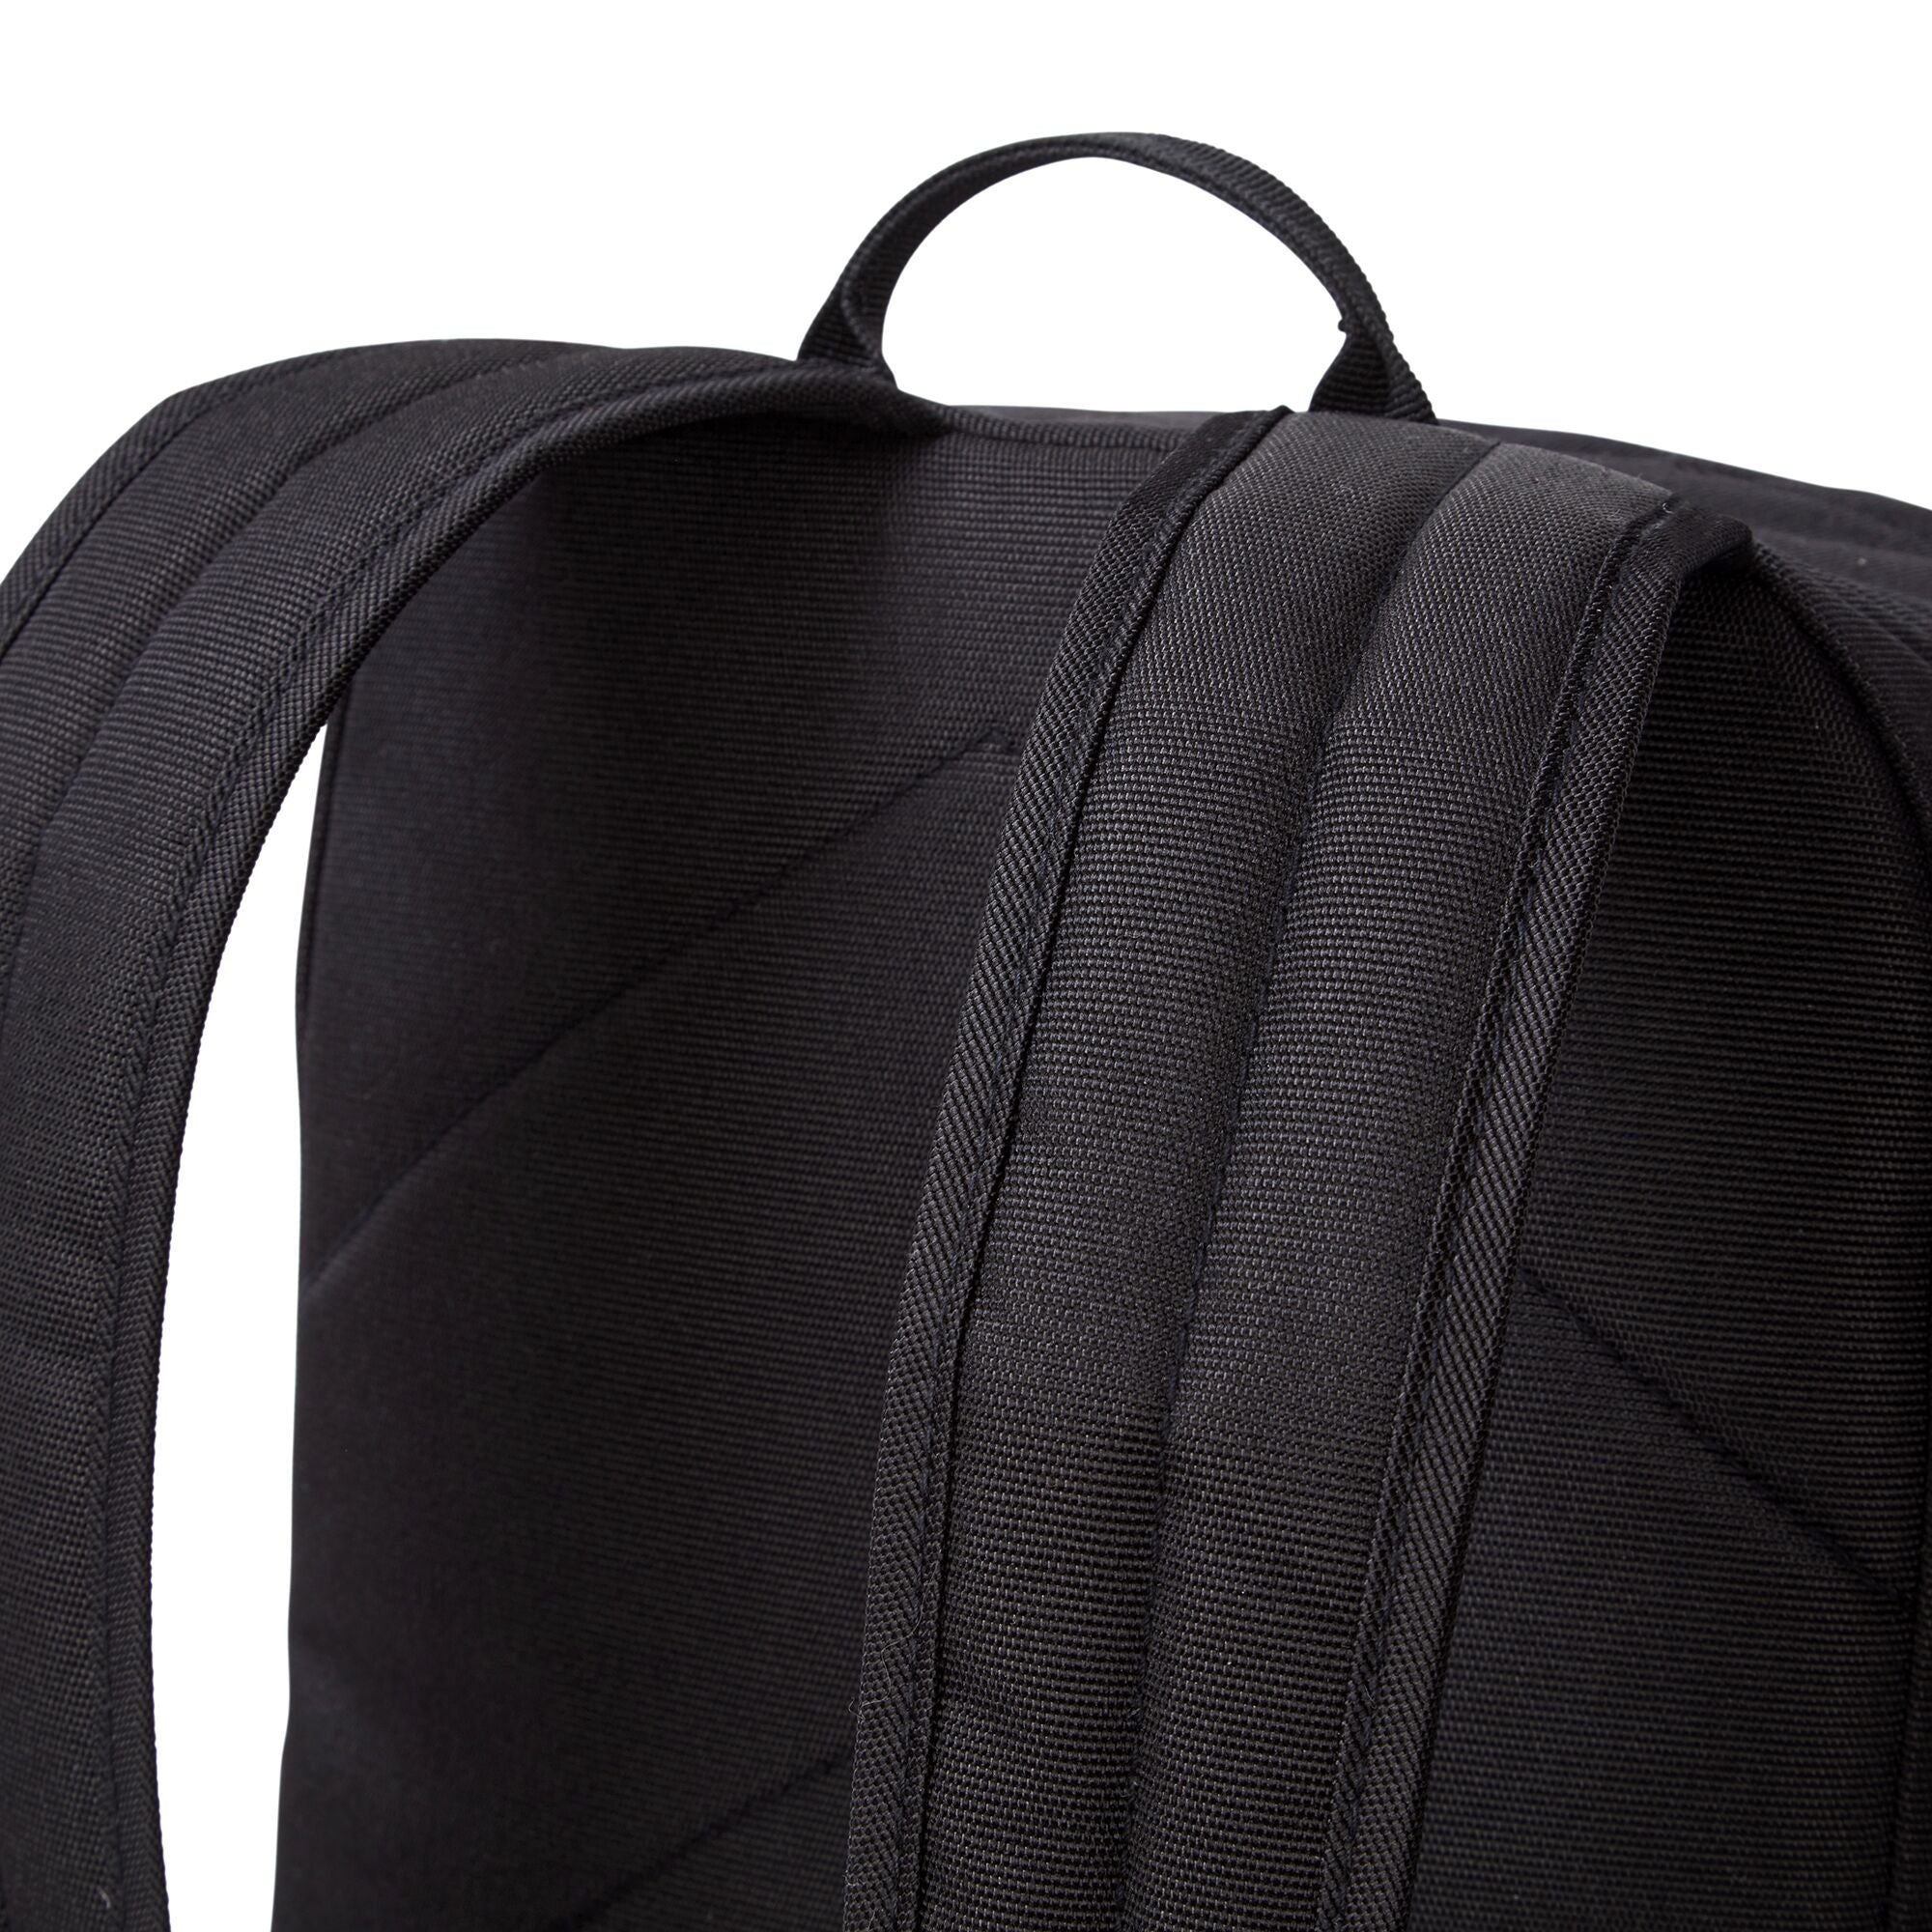 14L Kiwi Classic Backpack | Black